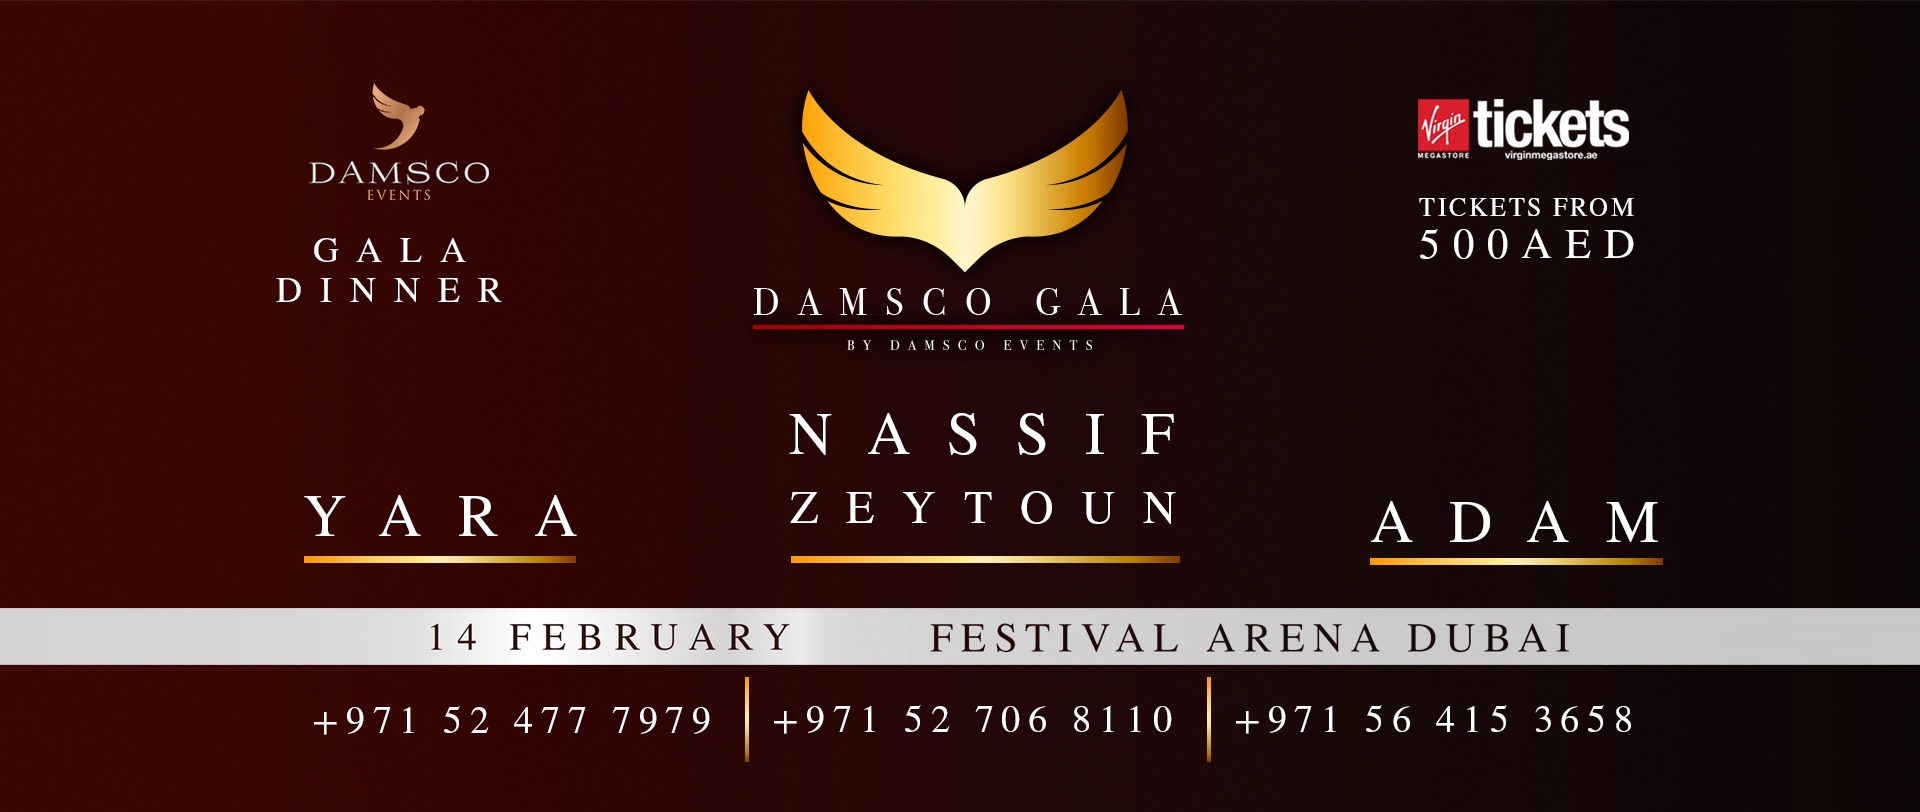 Damsco Gala - Coming Soon in UAE